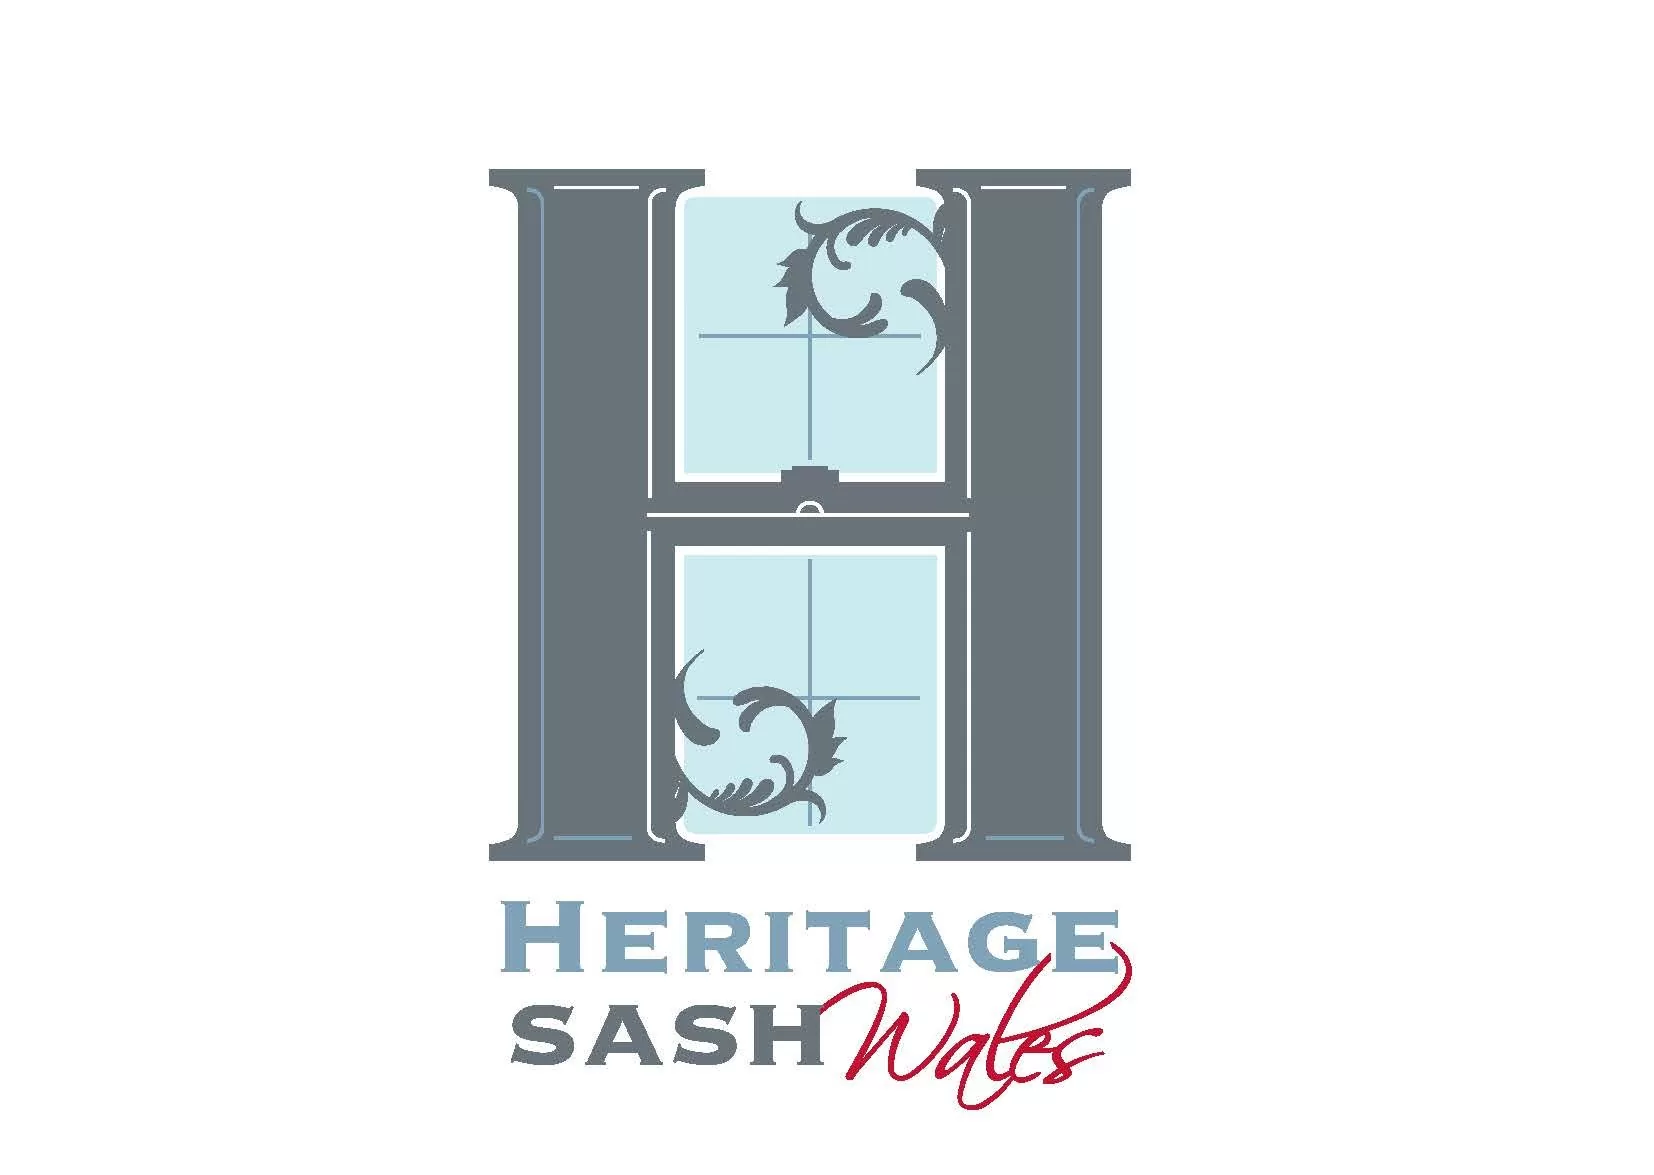 Heritage Sash Wales joinery logo